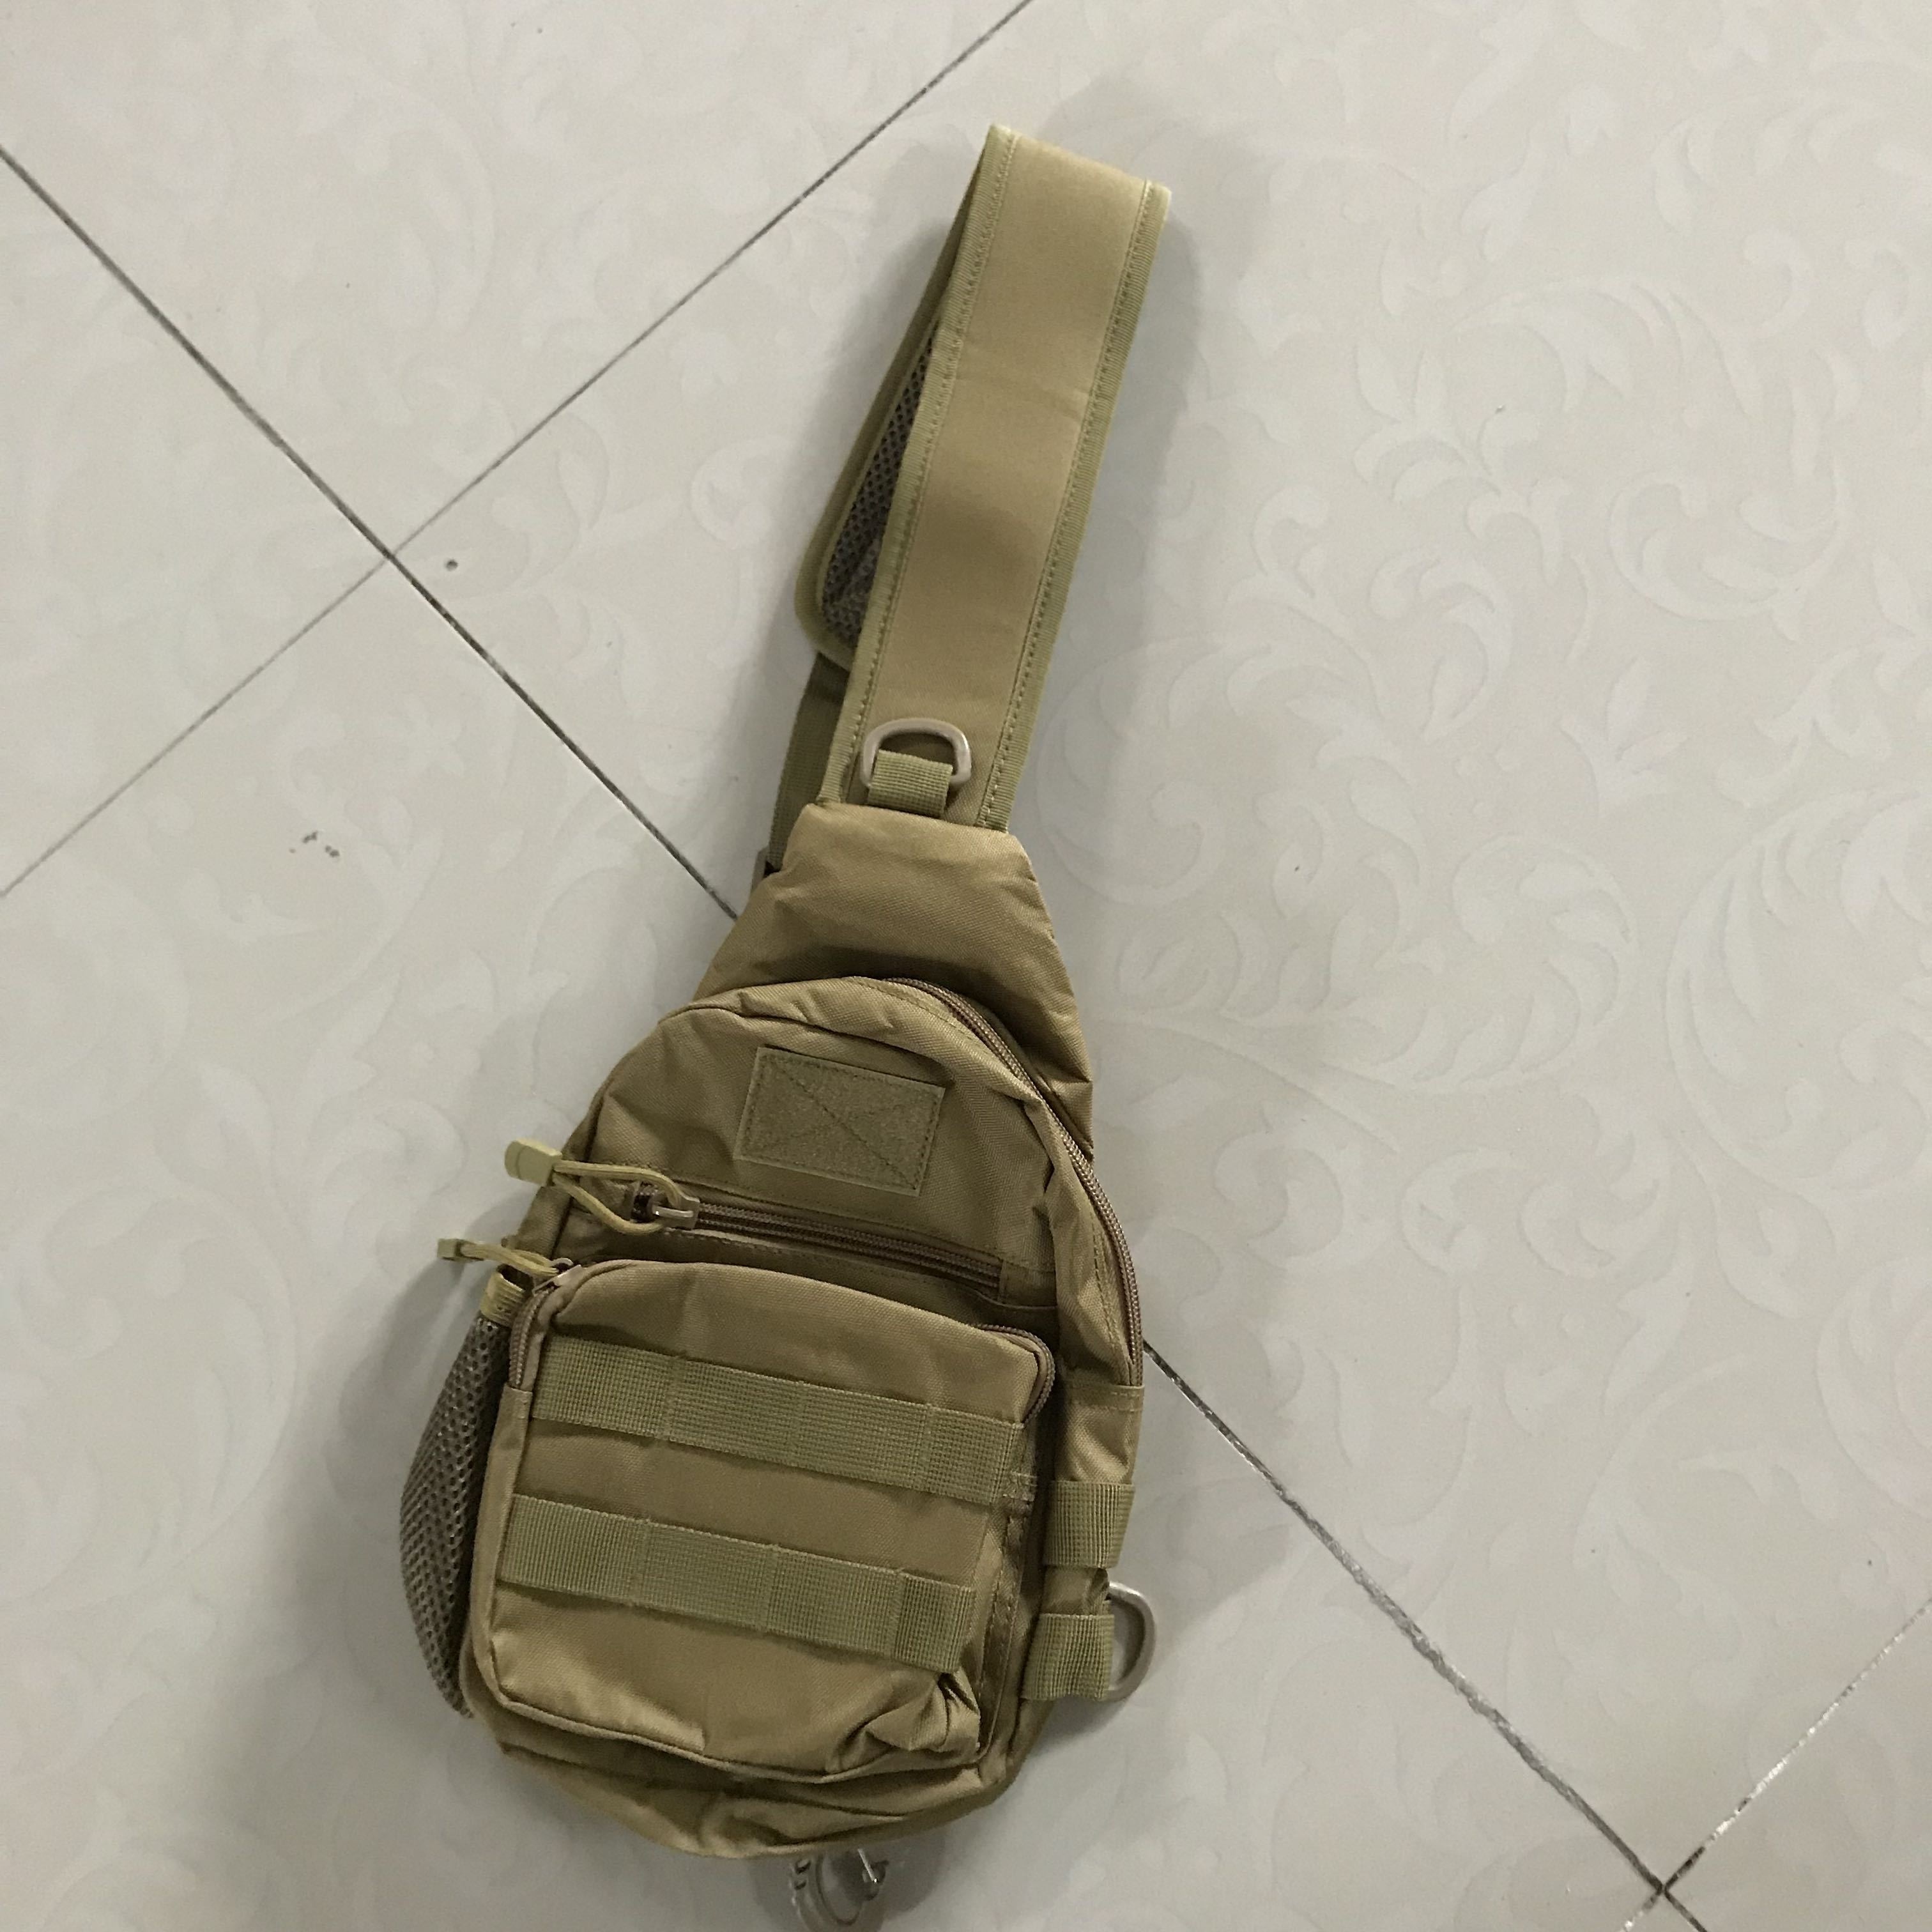 900d Tactical Shoulder Bag Portable Military Man Chest Crossbody